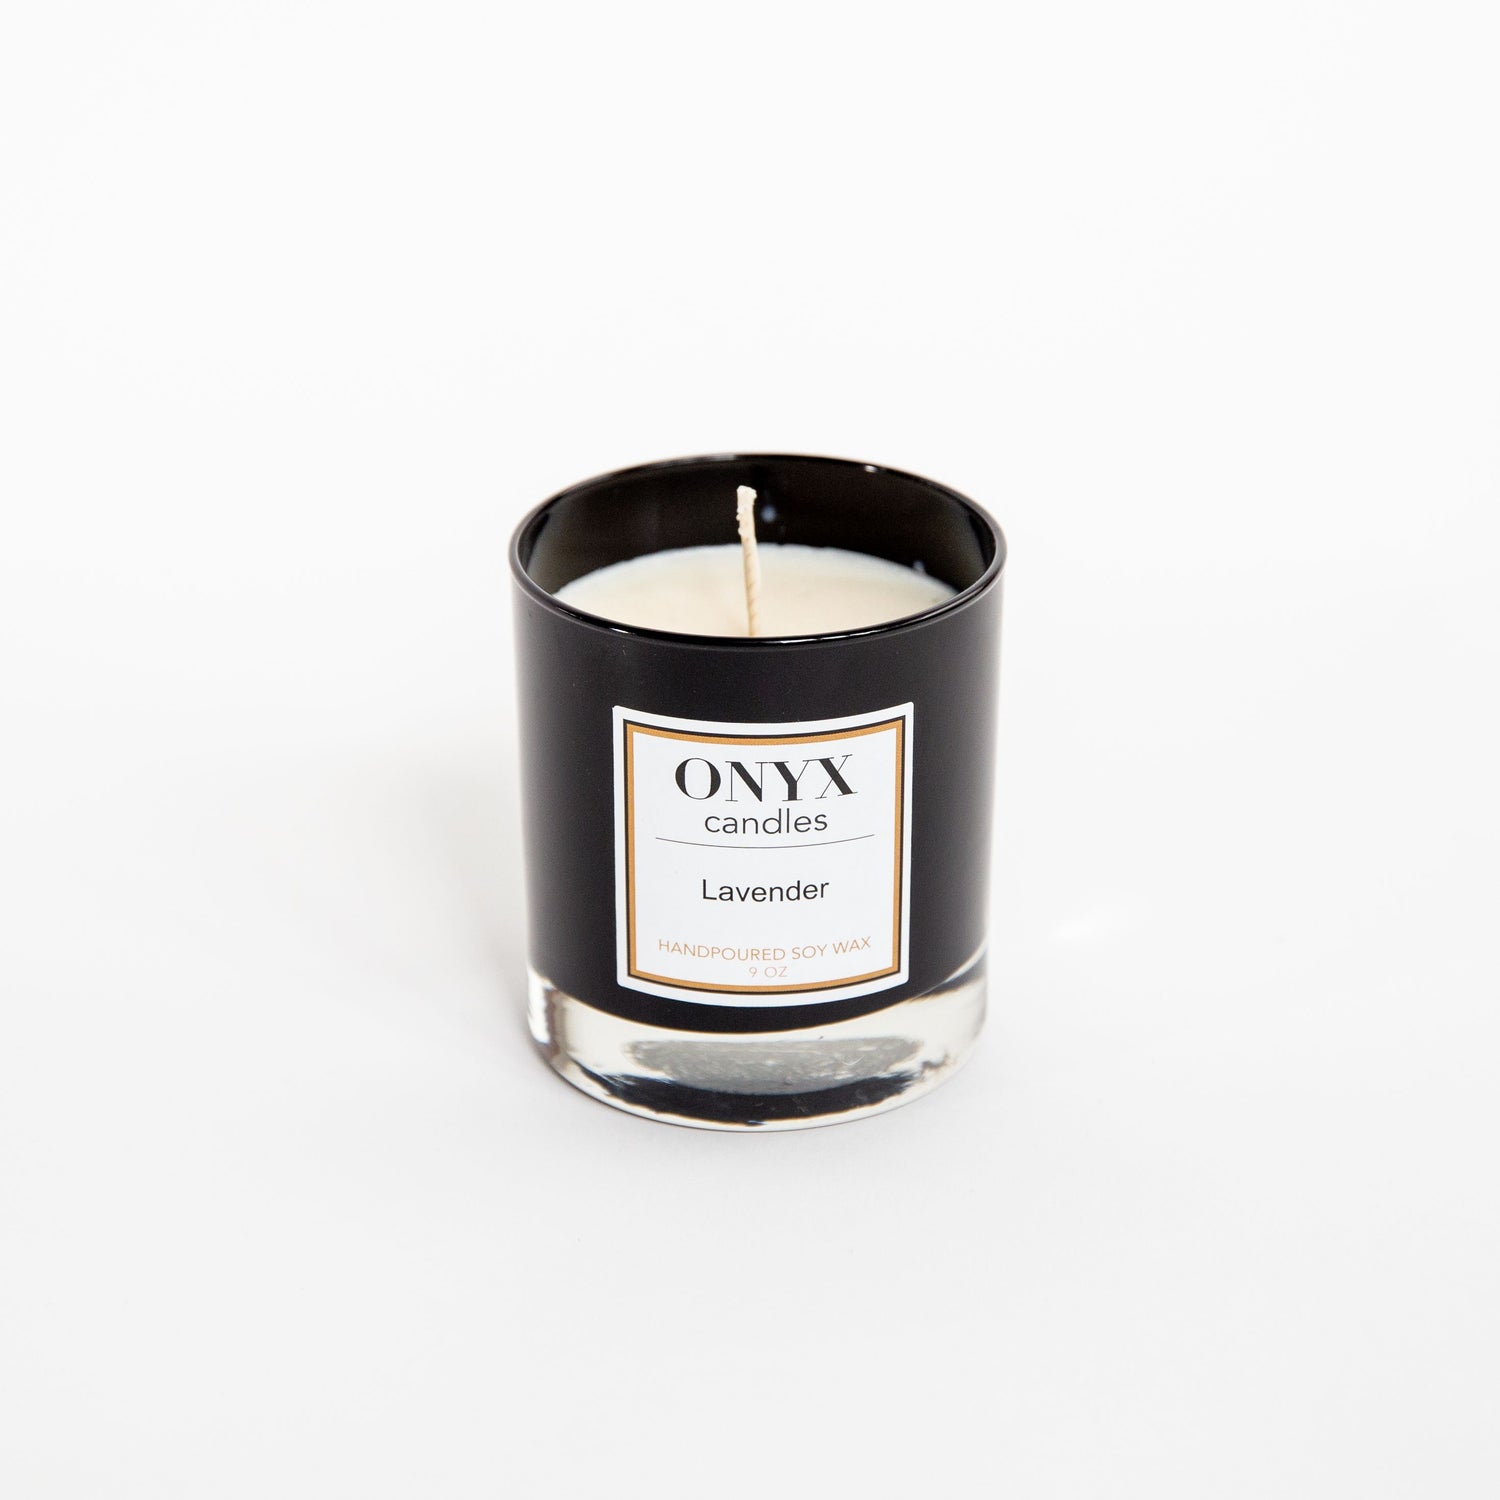 9 oz black glass jar variant in the scent of Lavender